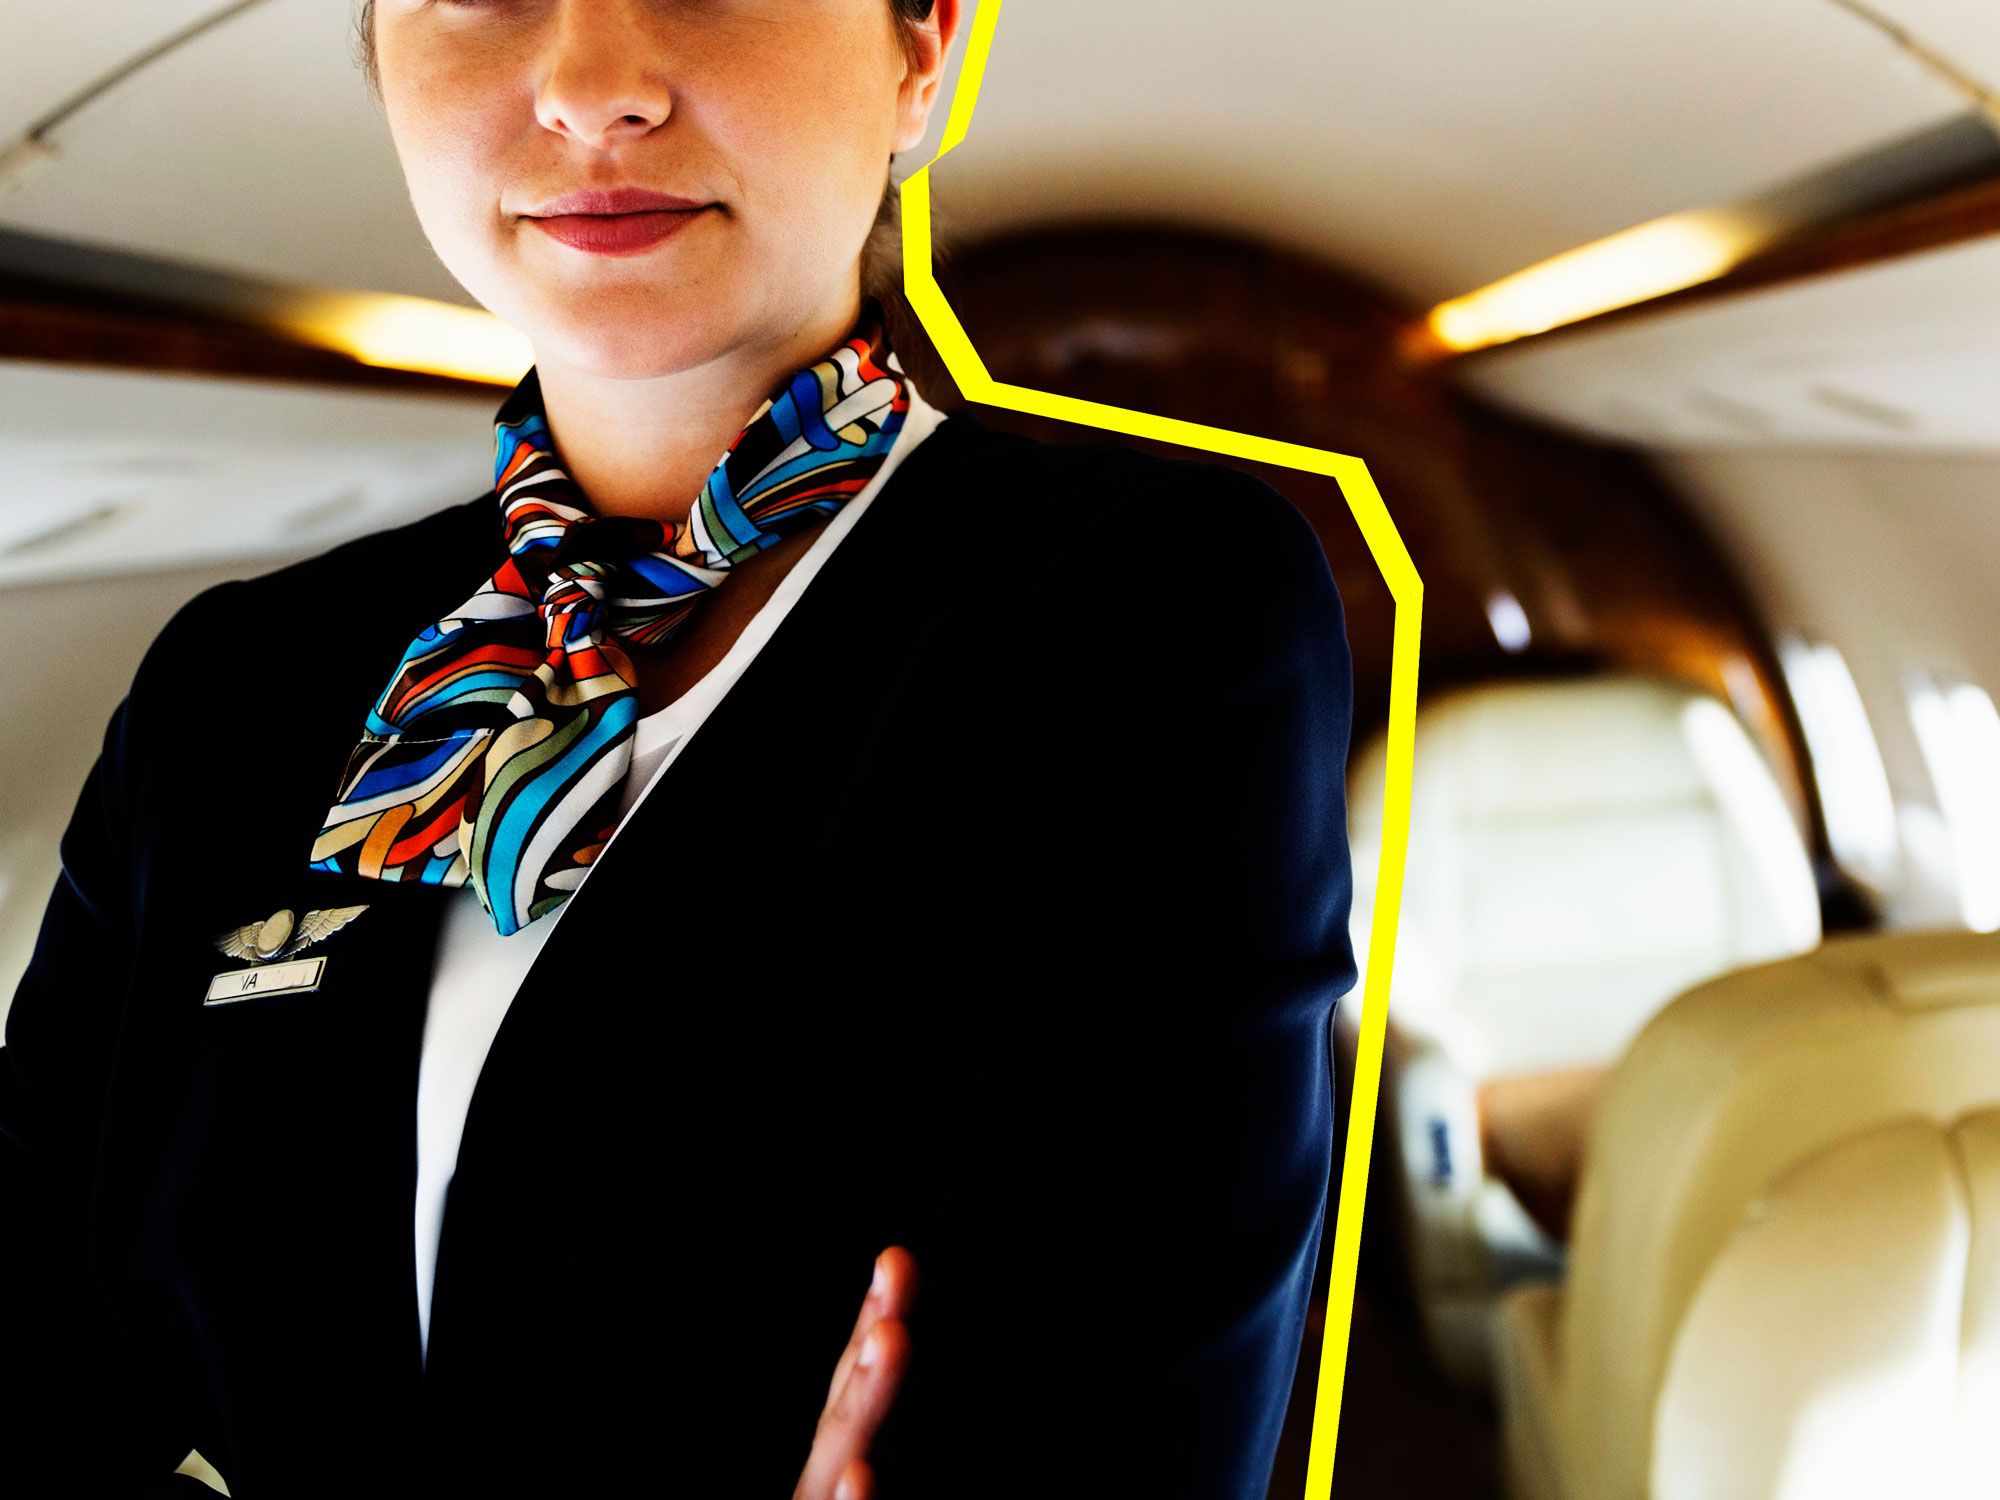 Stunning Asian stewardesses please their nasty boss